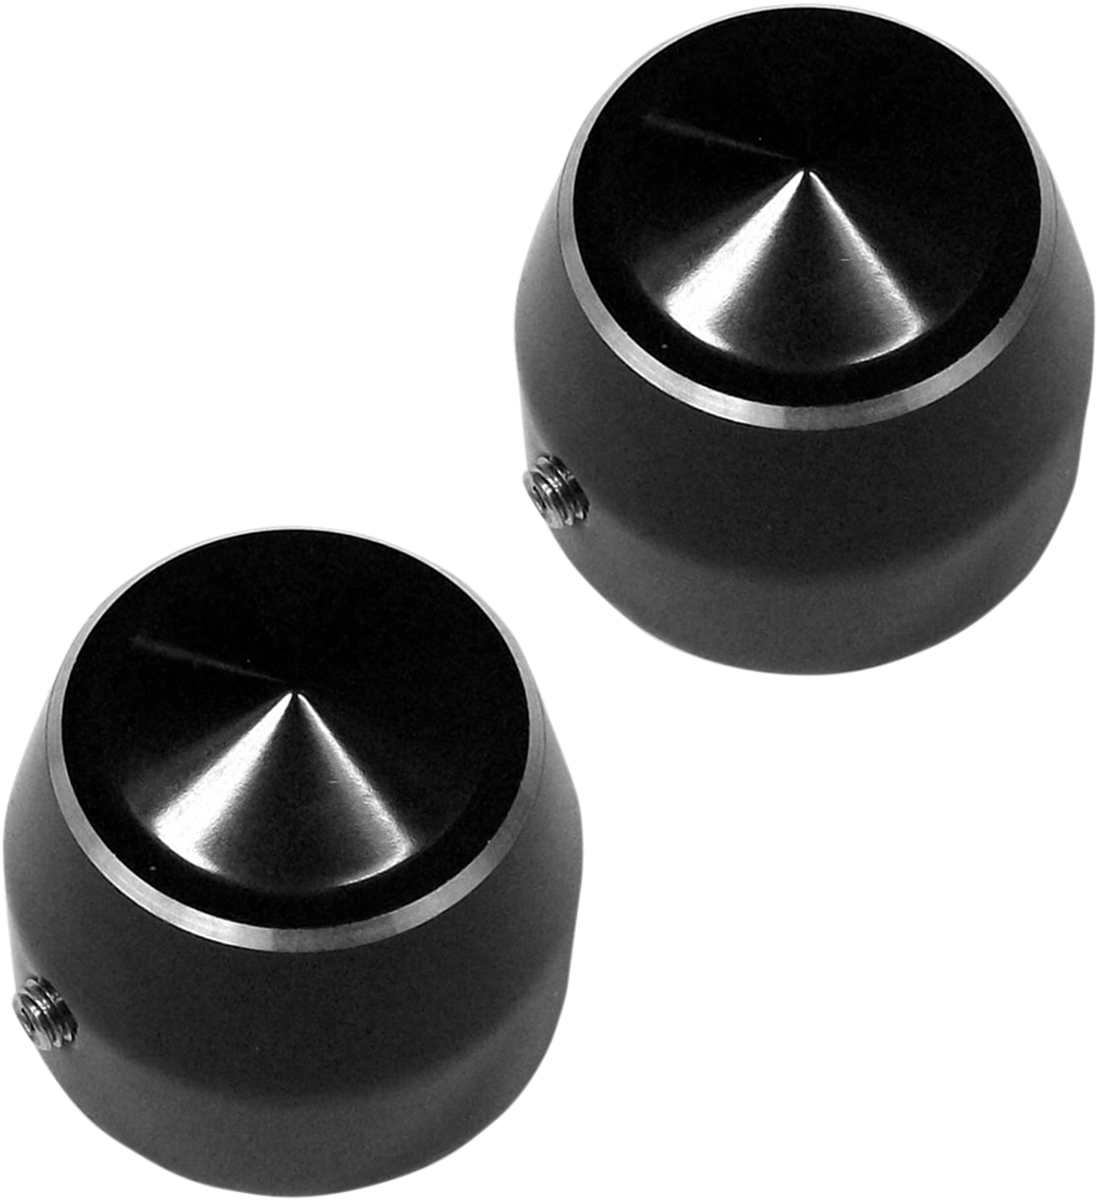 0214-0825 - ACCUTRONIX Axle Caps - Black - Elite - 25 mm TAC102-EN